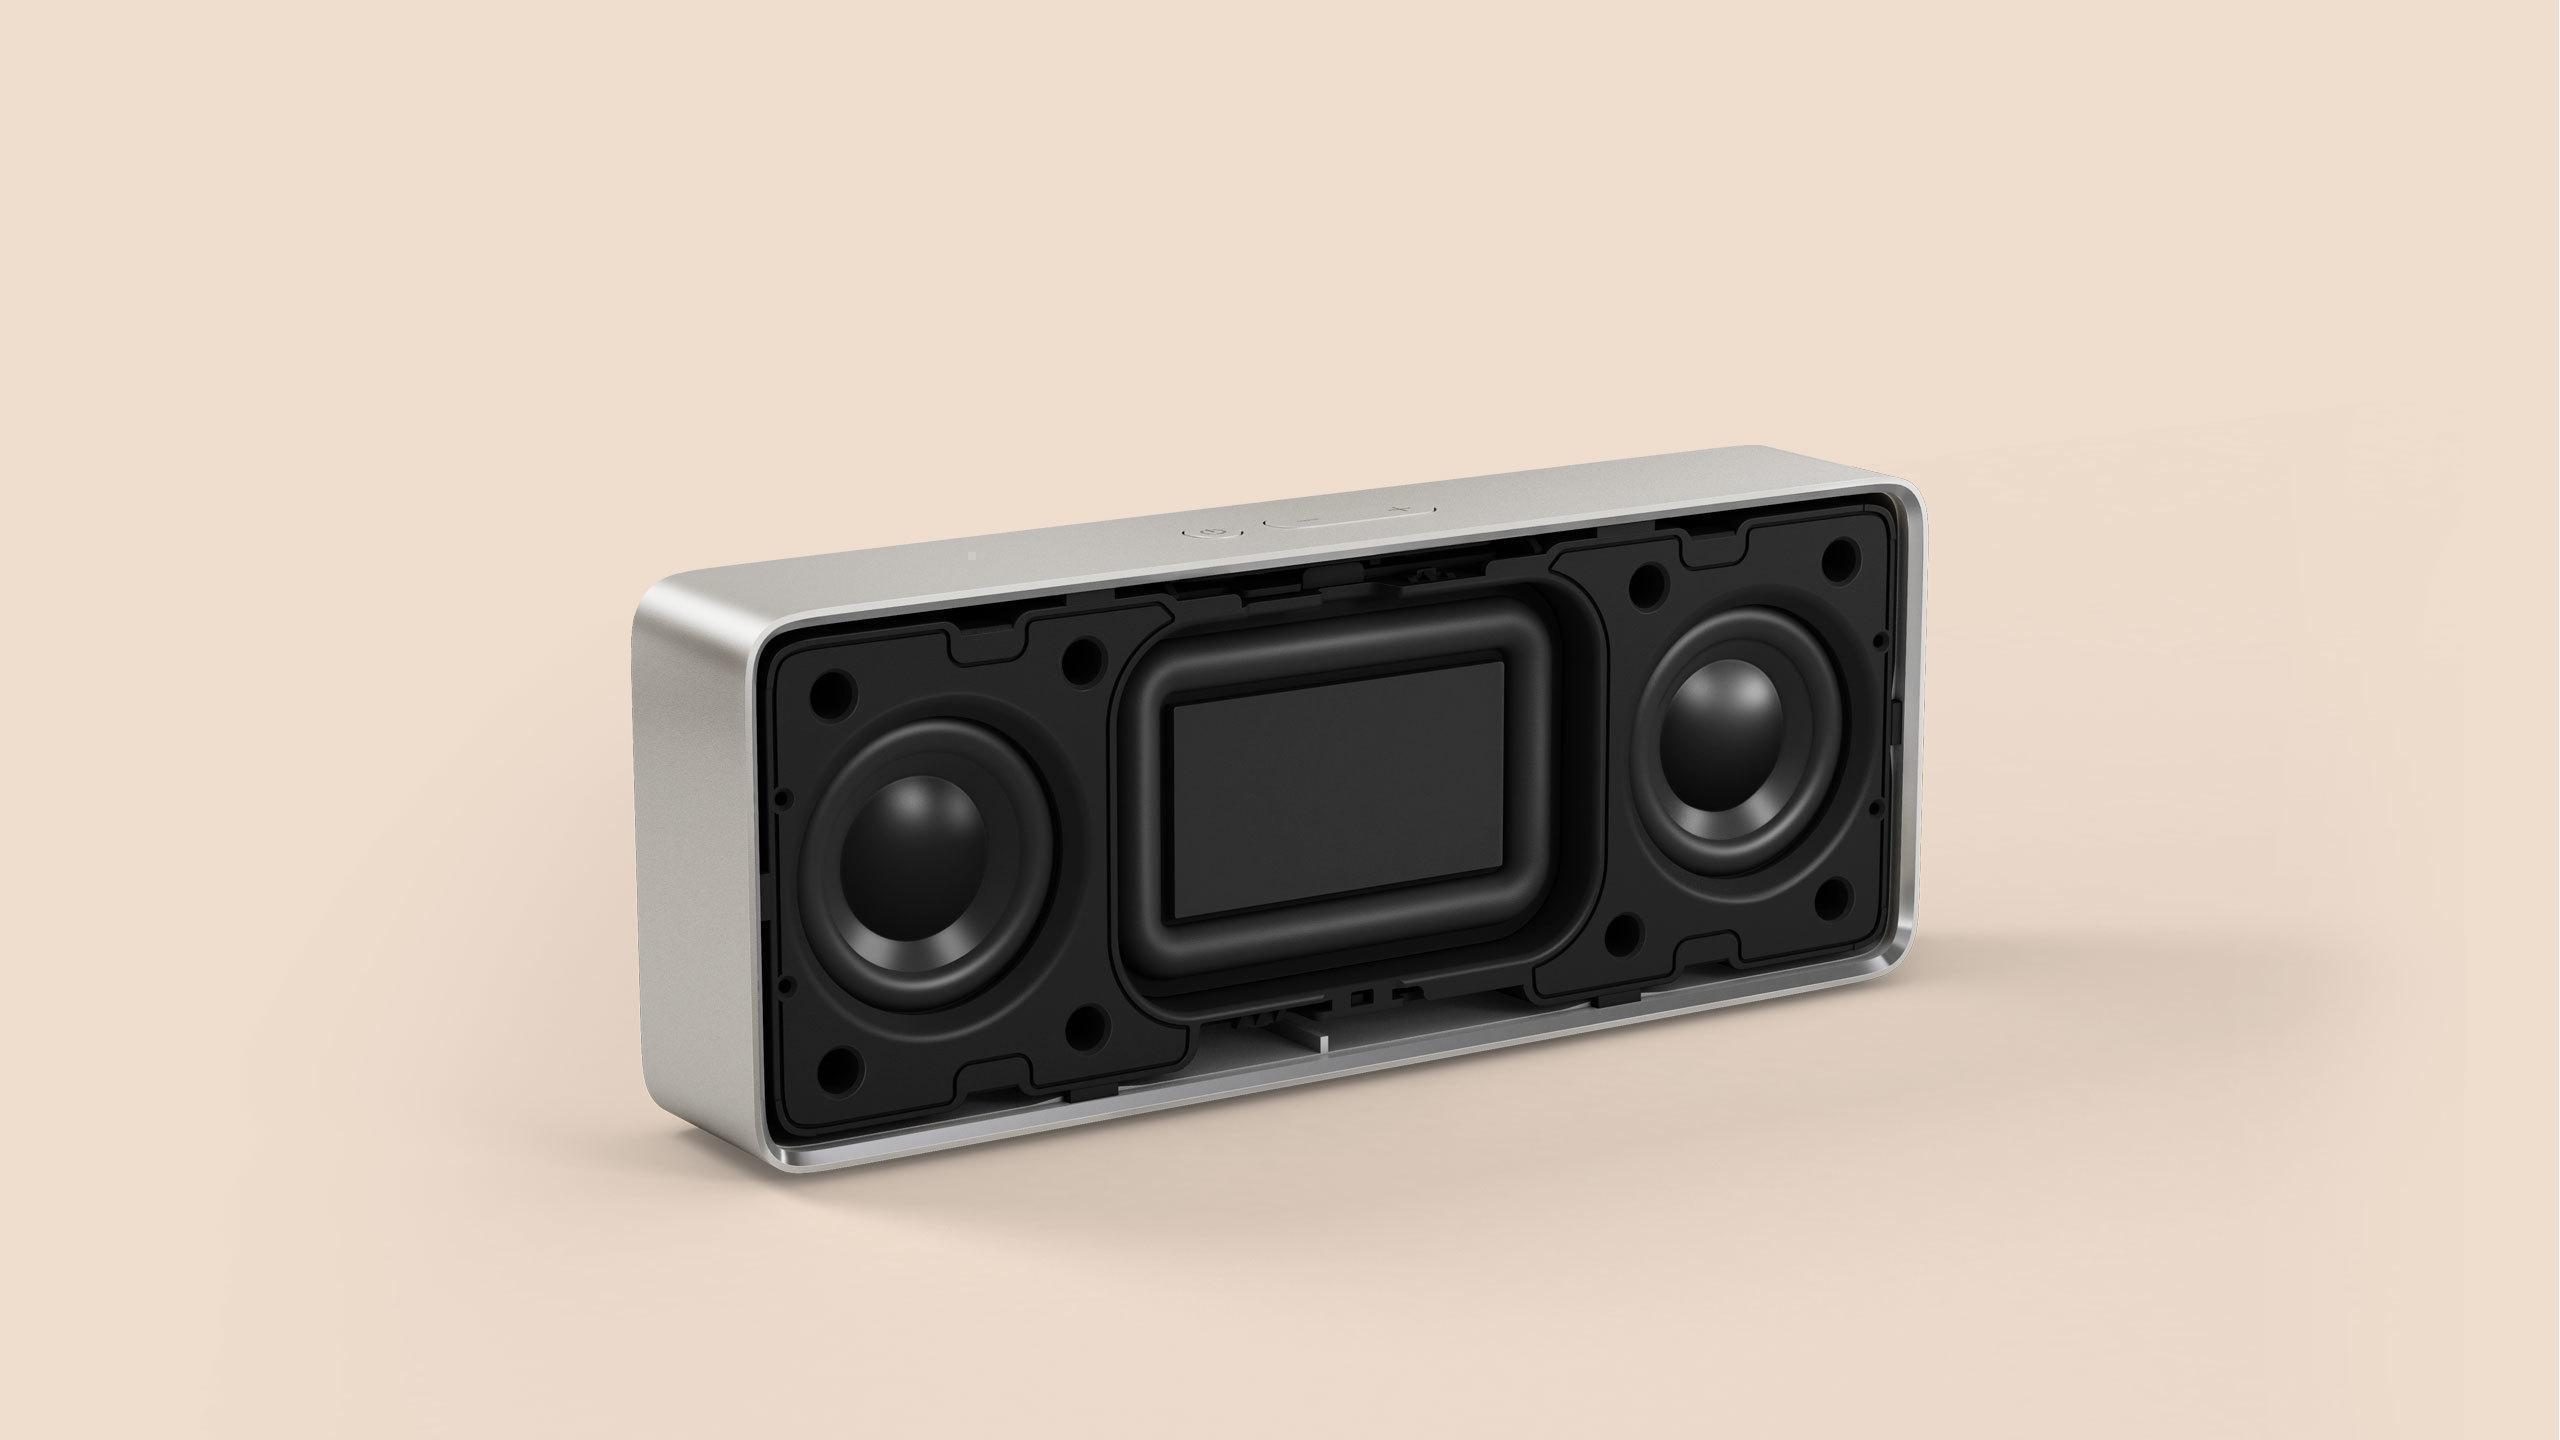 Original Xiaomi Mi Bluetooth Speaker Basic 2 - White - Global Version